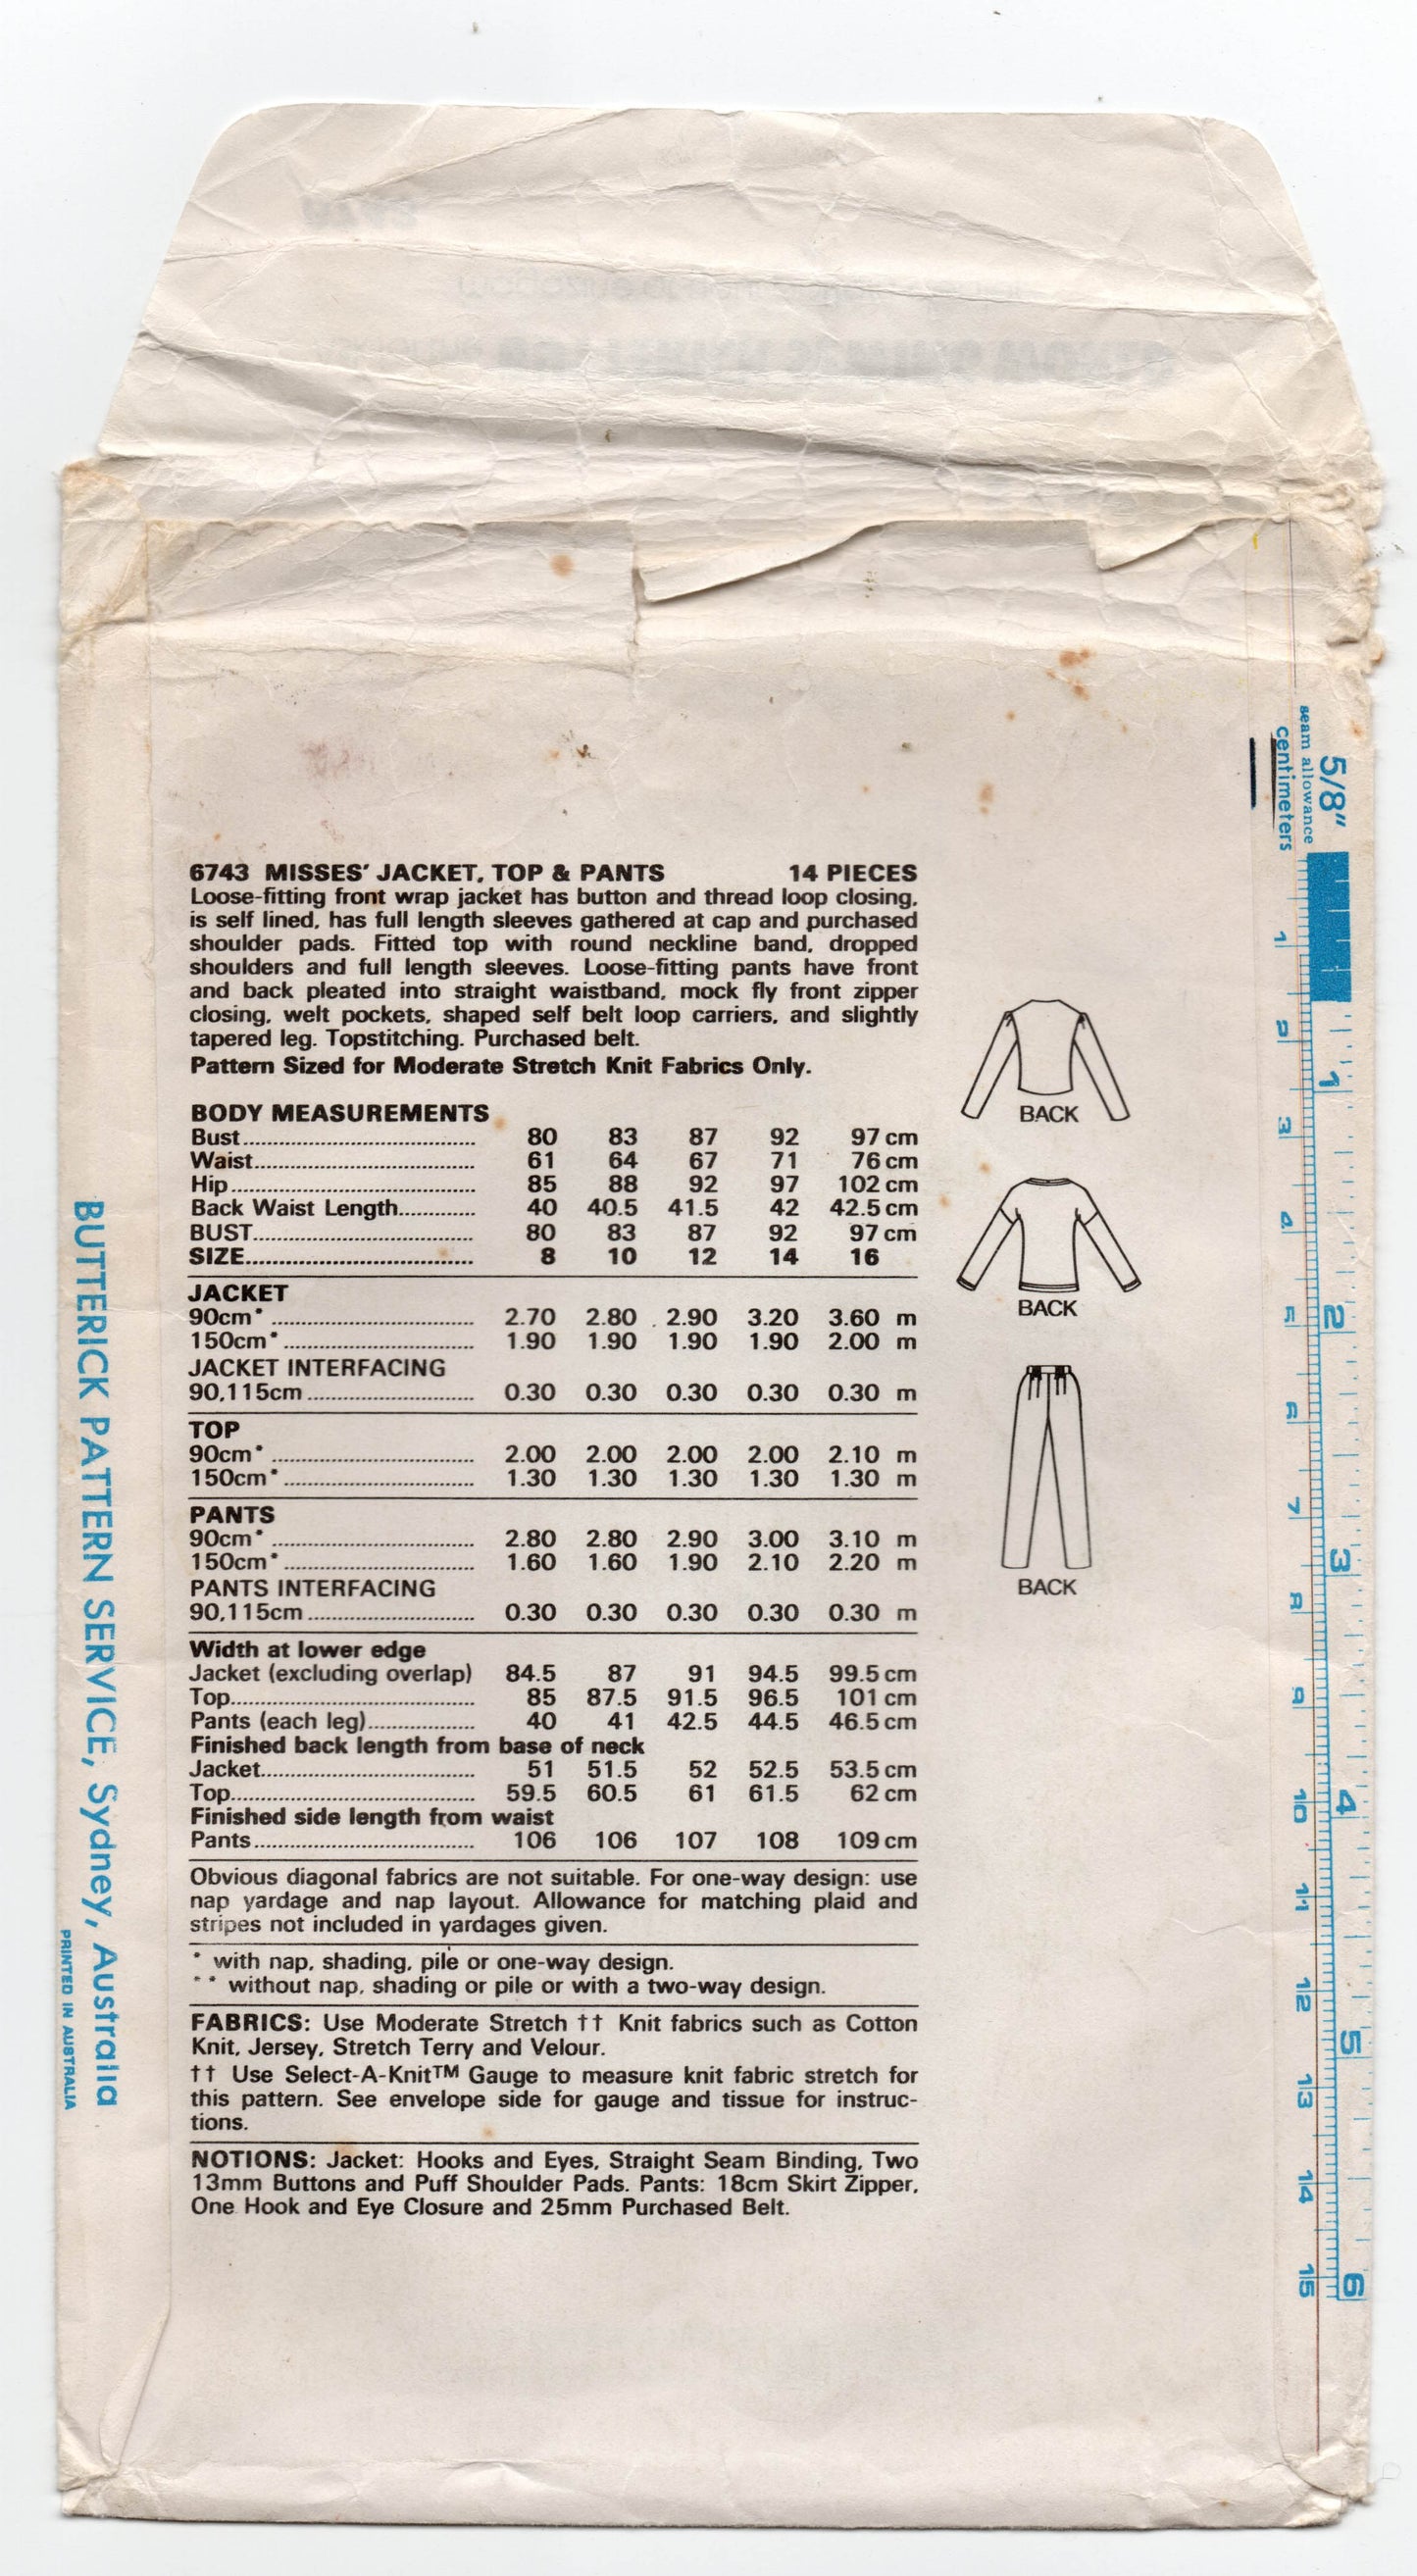 Butterick 6743 NANCY STOLKIN Womens Stretch Top Jacket & Pants 1980s Vintage Sewing Pattern Size 14 UNCUT Factory Folded